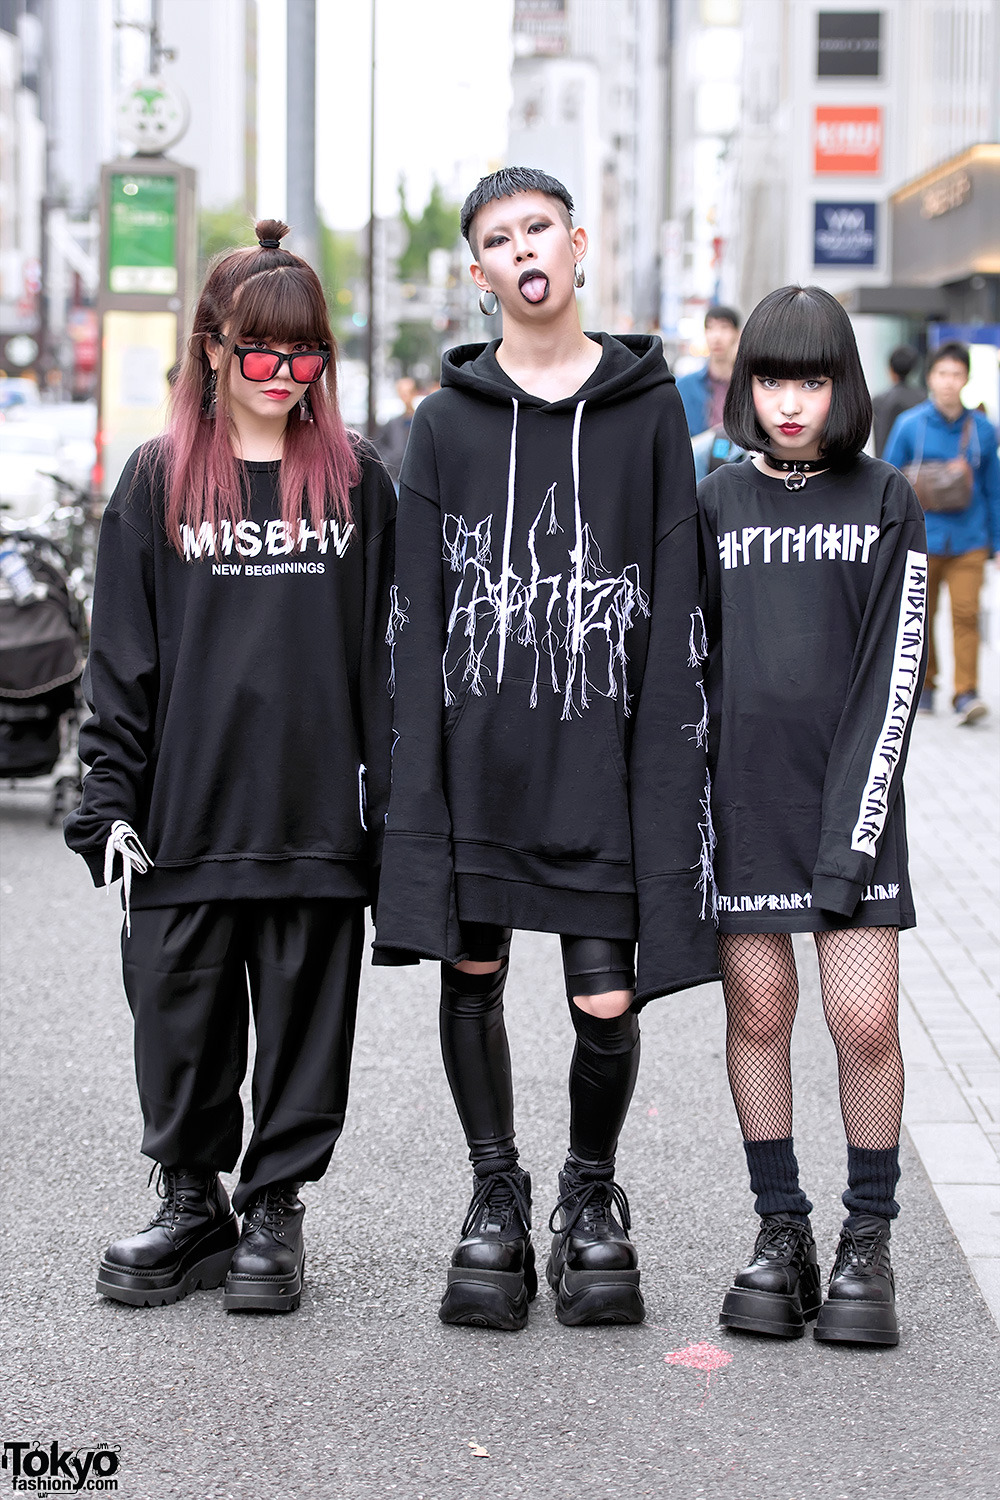 tokyo-fashion:  Kasumi (20), Cham (19), and Baek (17) in monochrome fashion on the